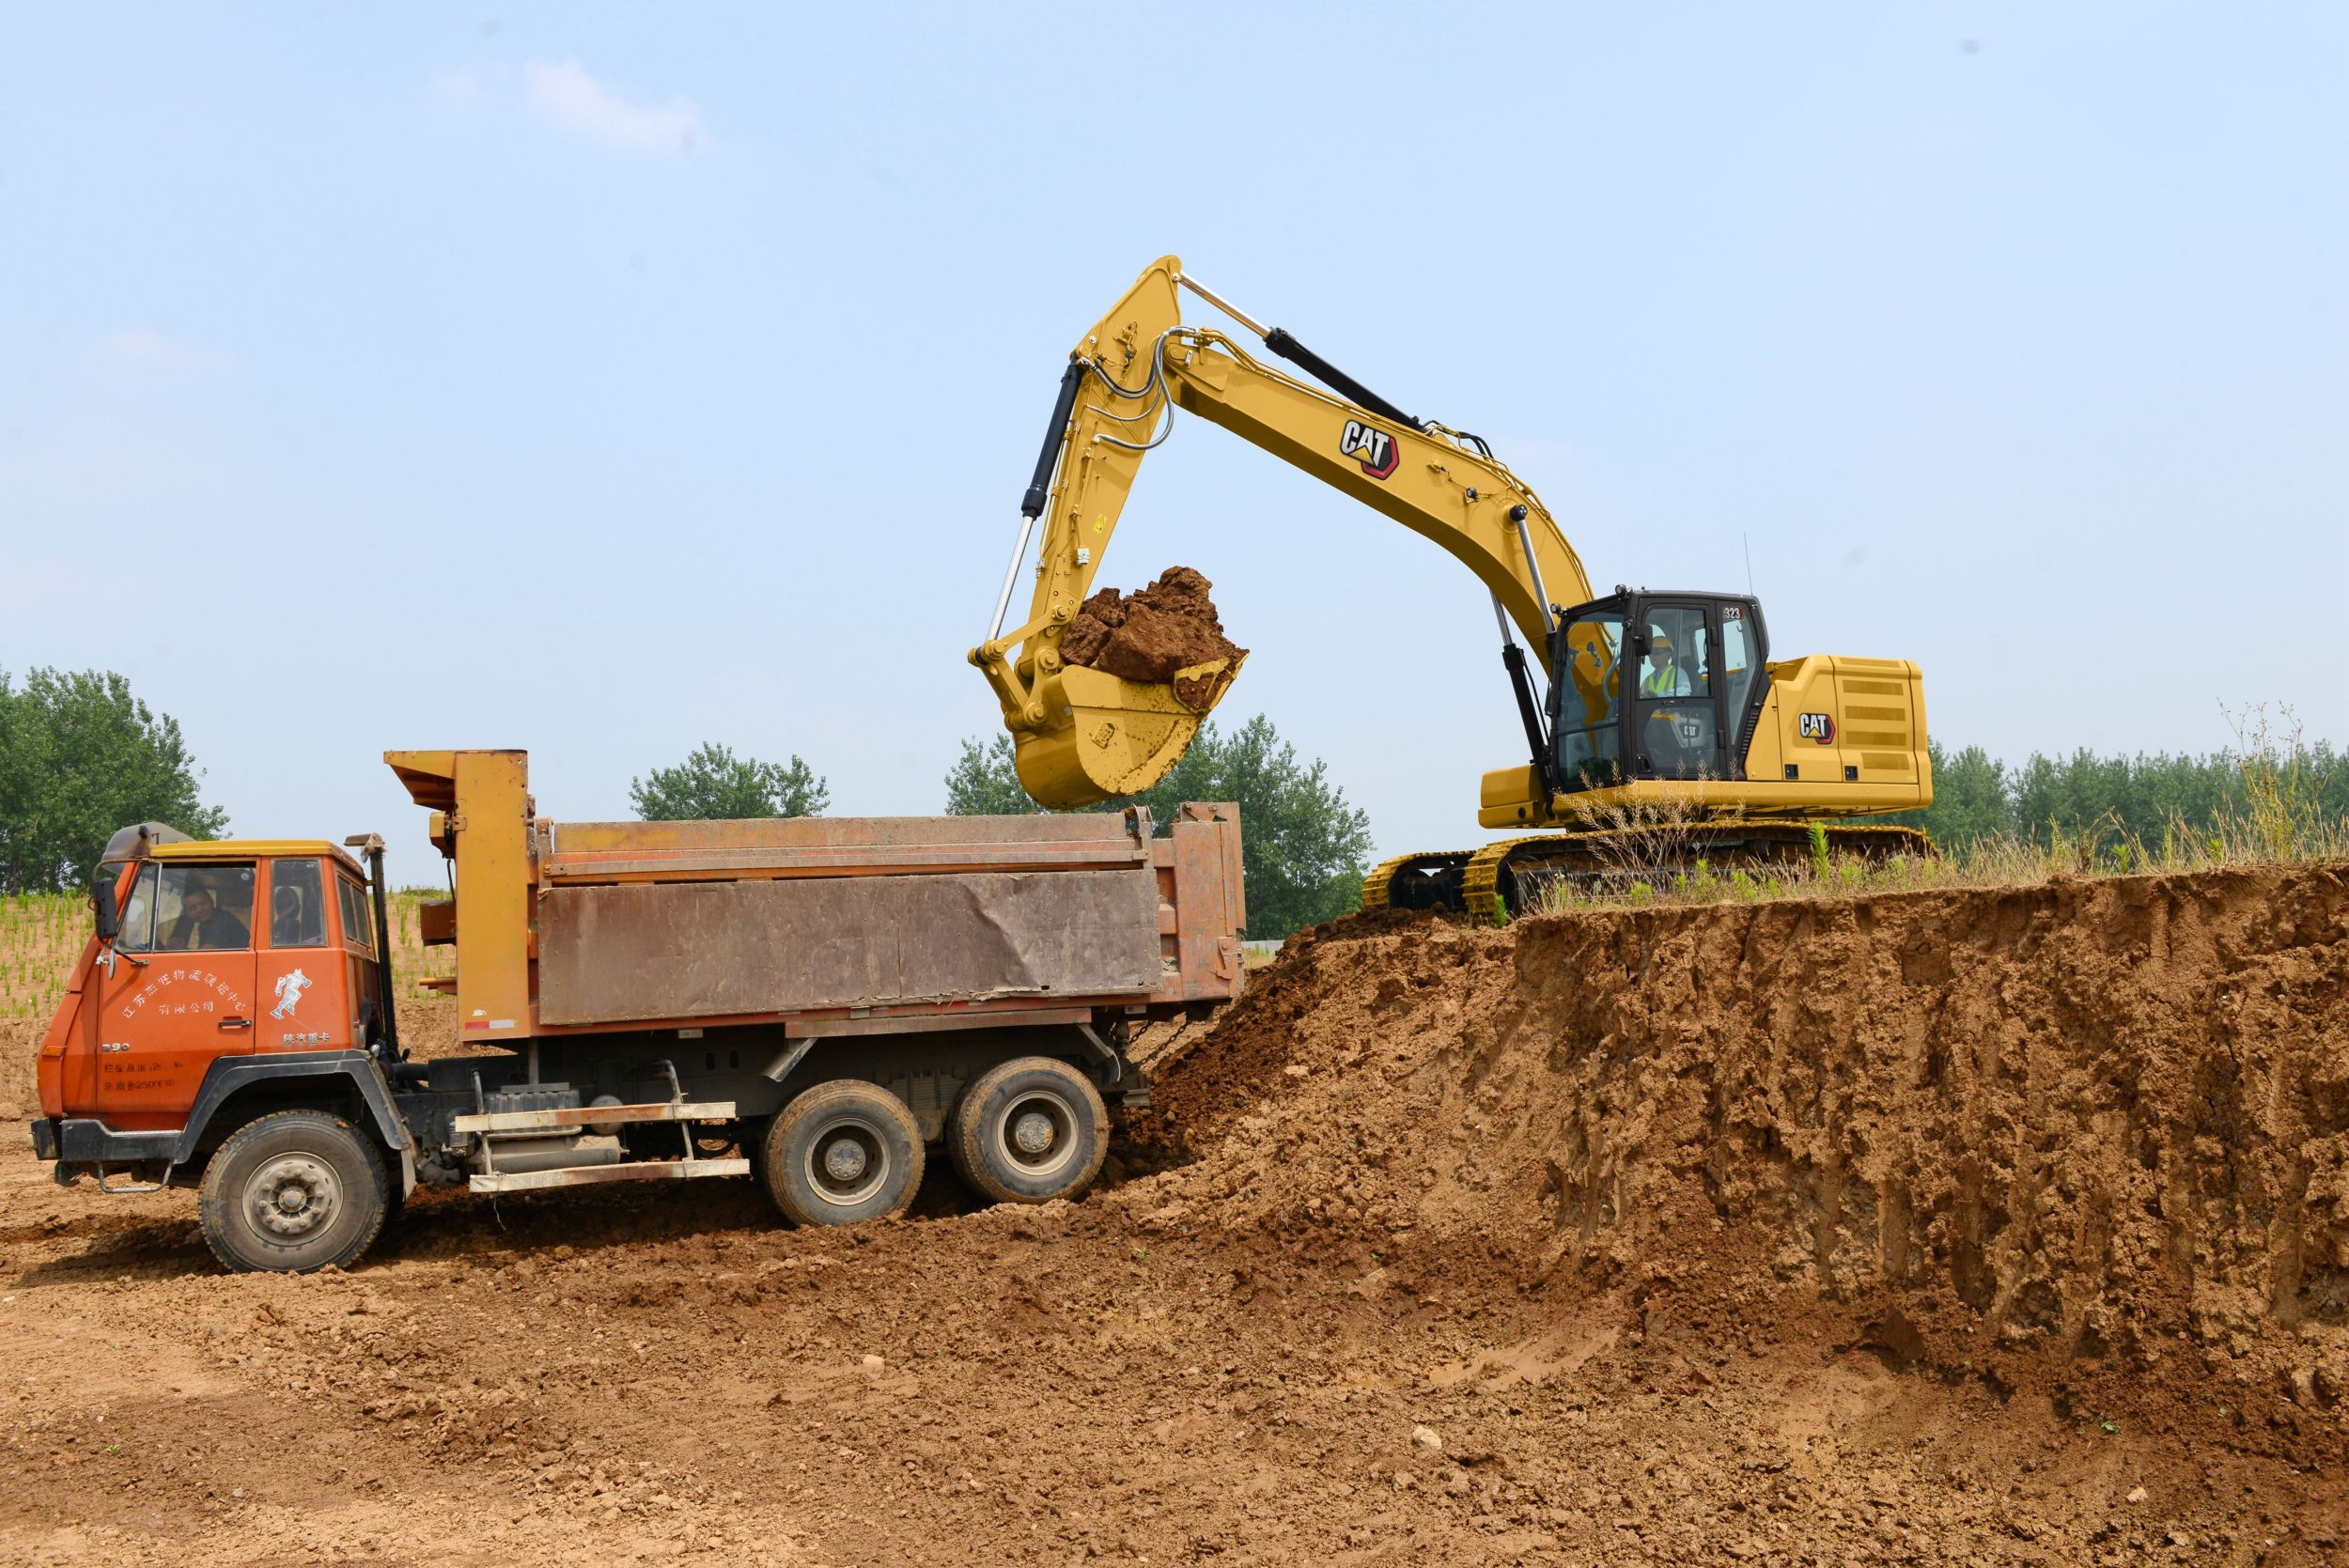 323 Excavator Loading a Truck